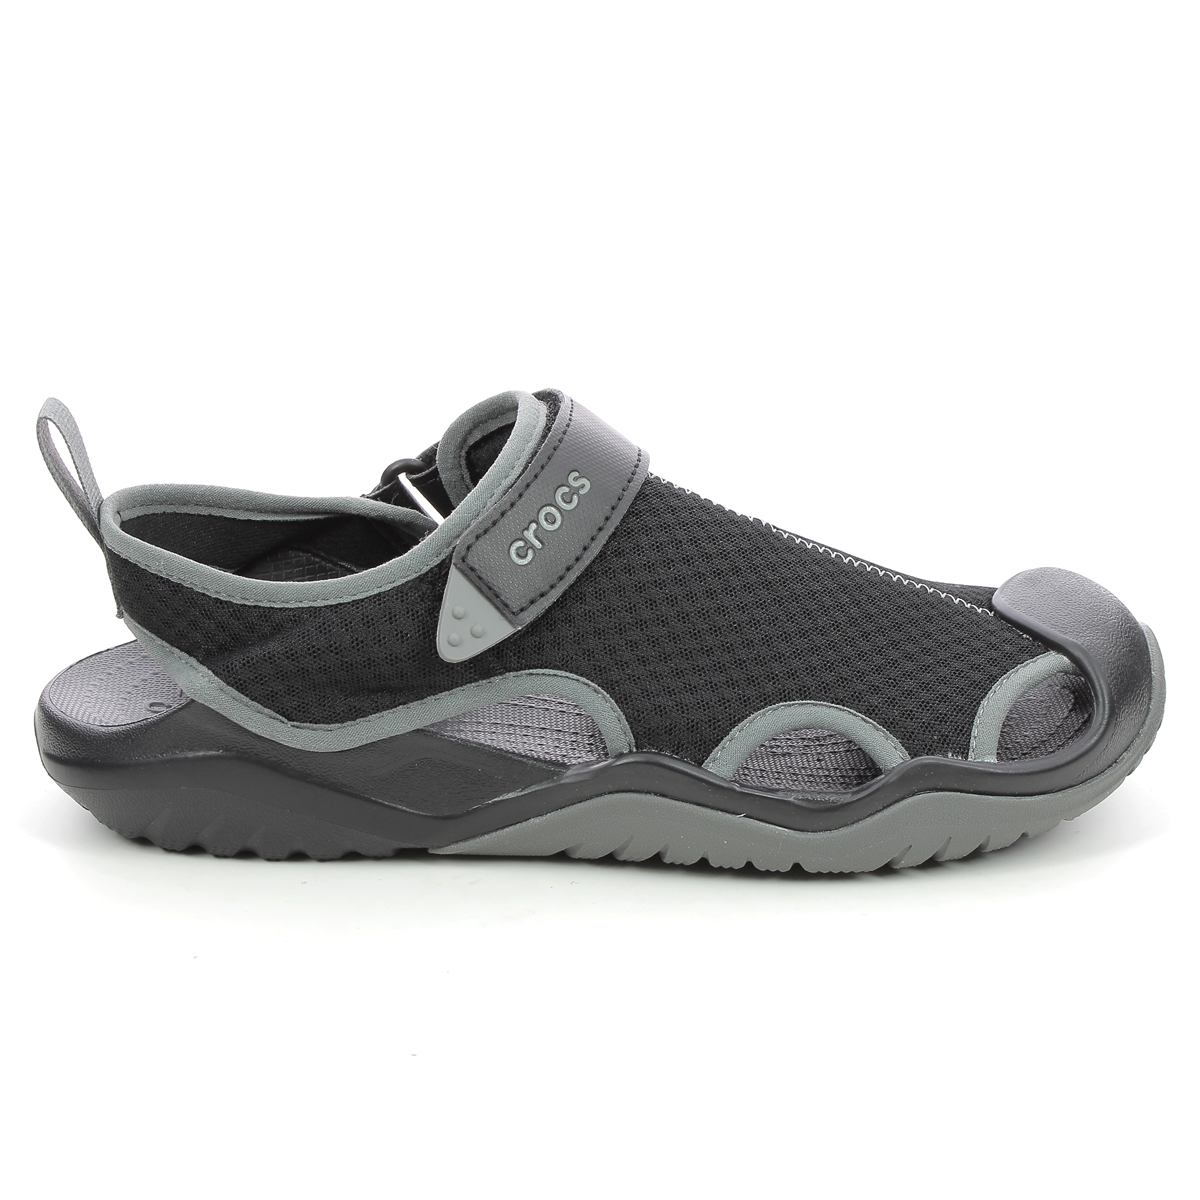 Crocs Swiftwater Mesh 205289-001 Black shoes